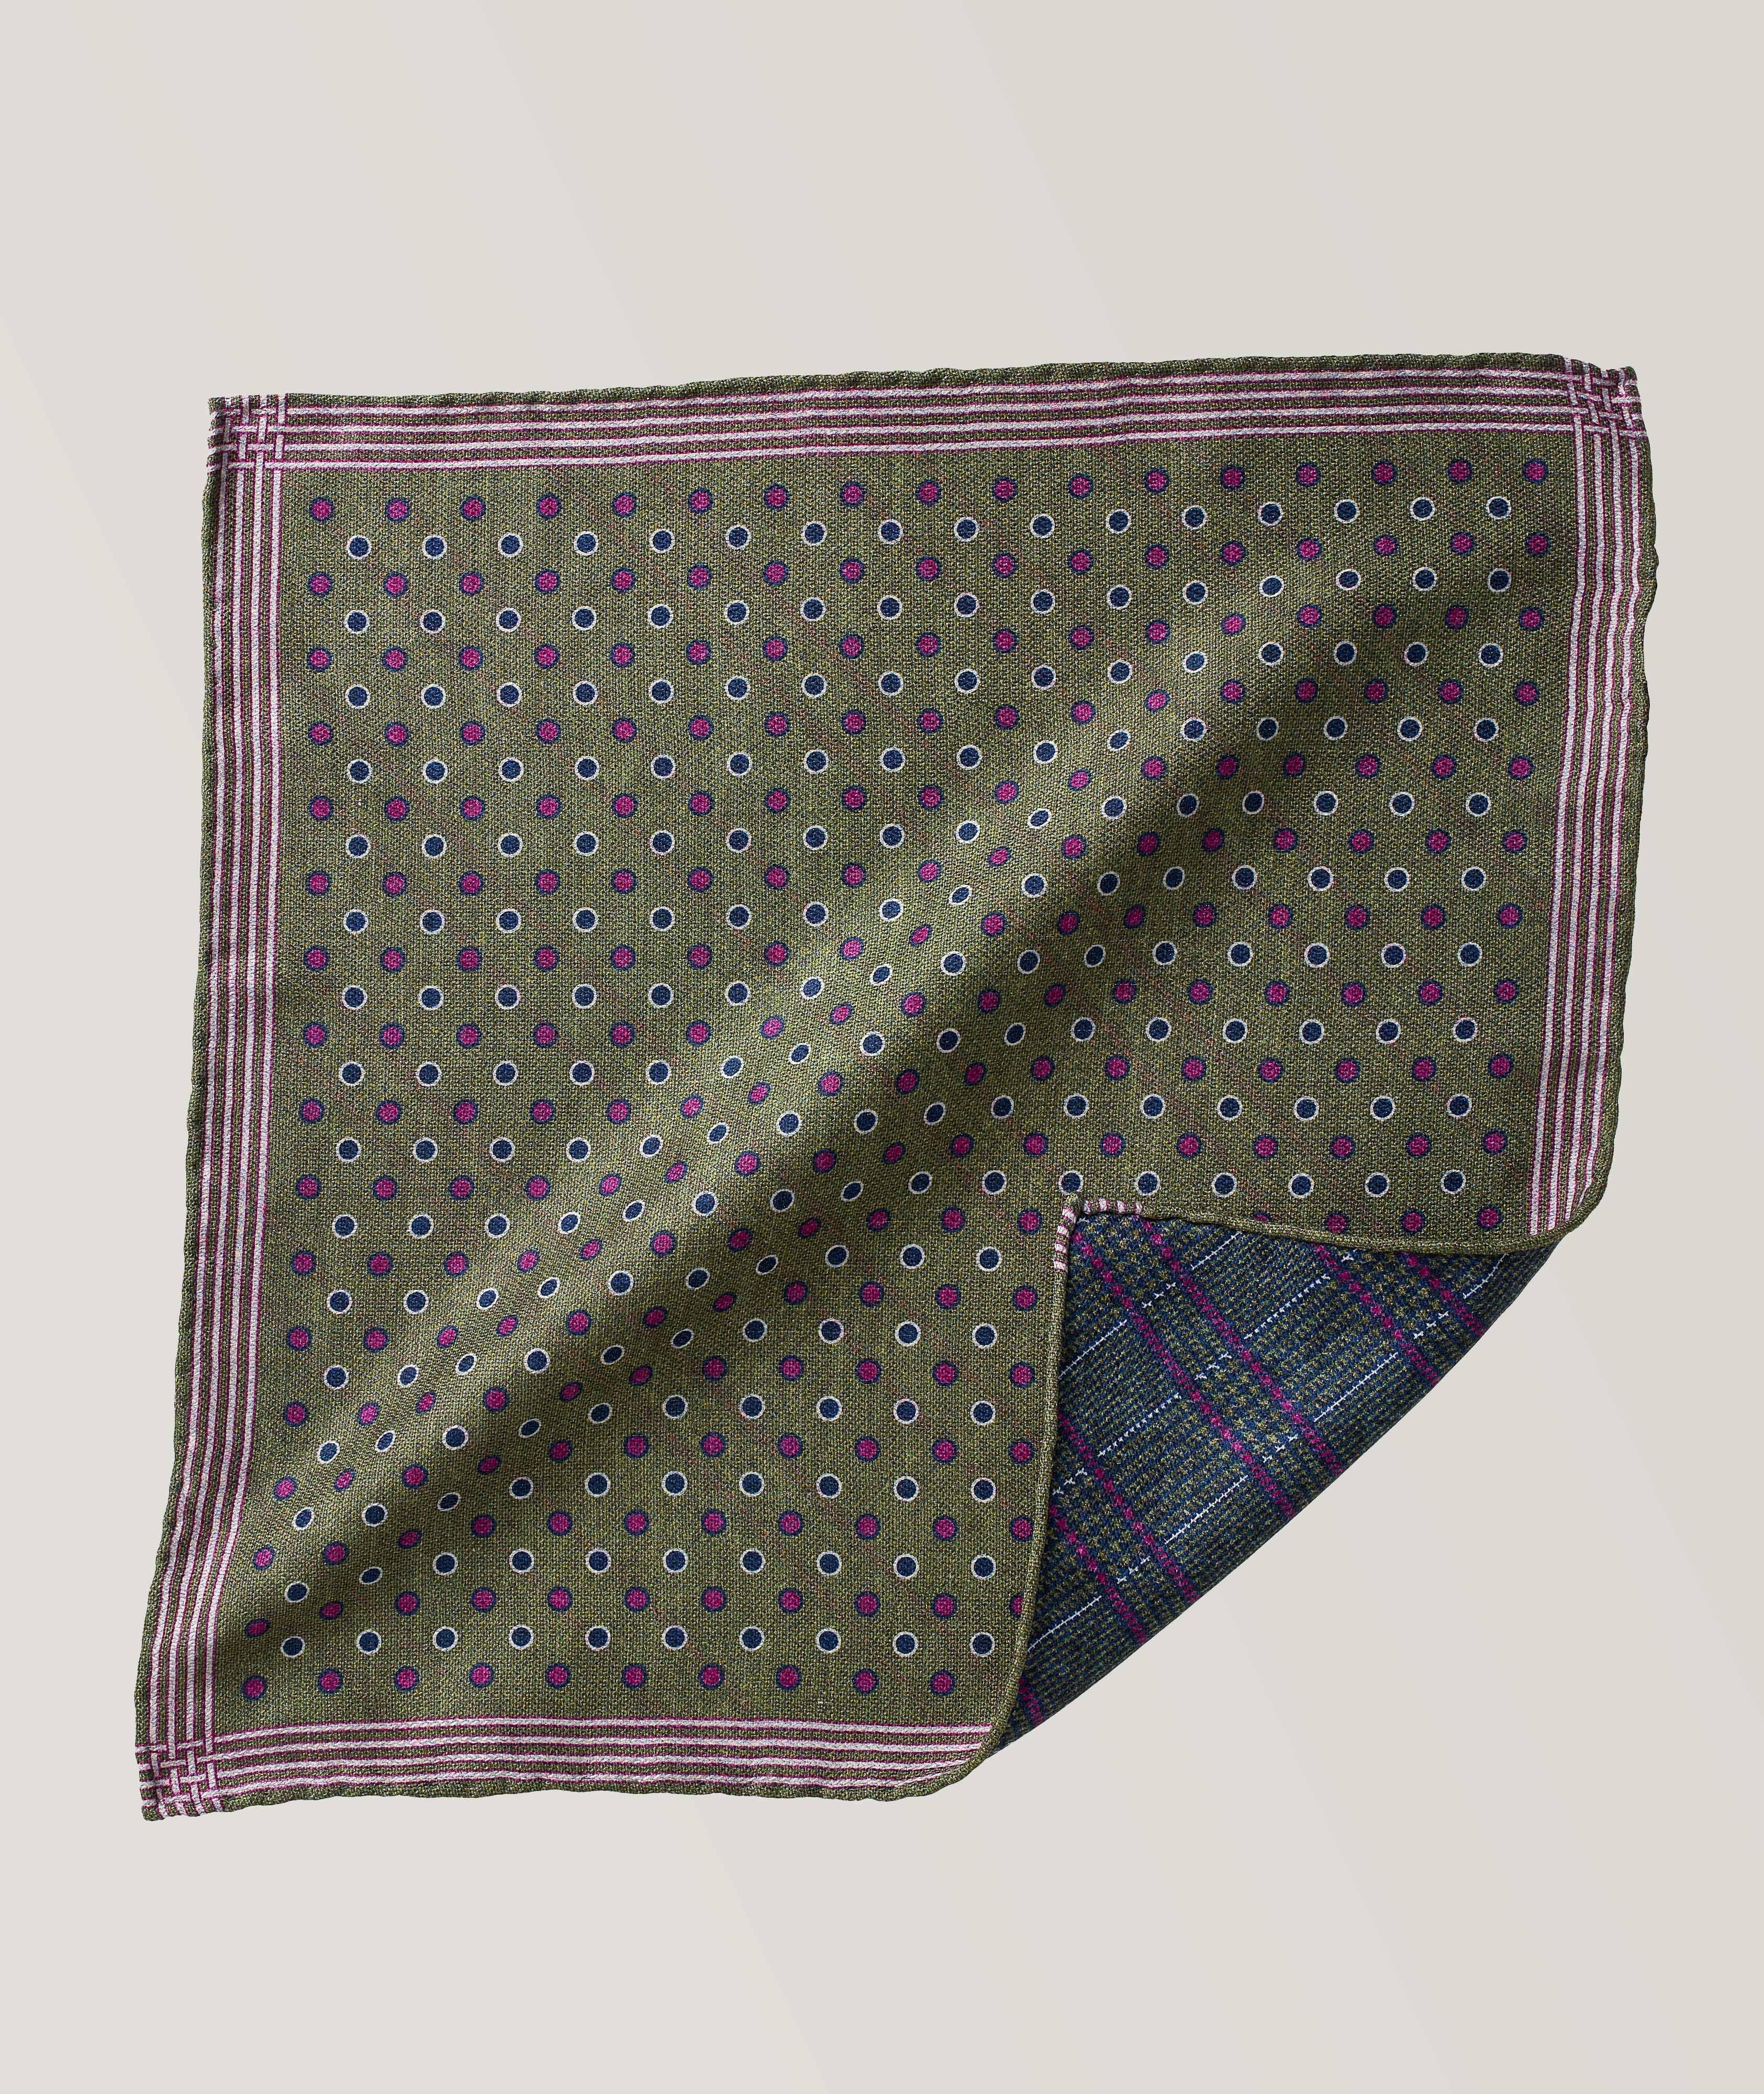 Reversible Glencheck Neat Print Silk Pocket Square image 0